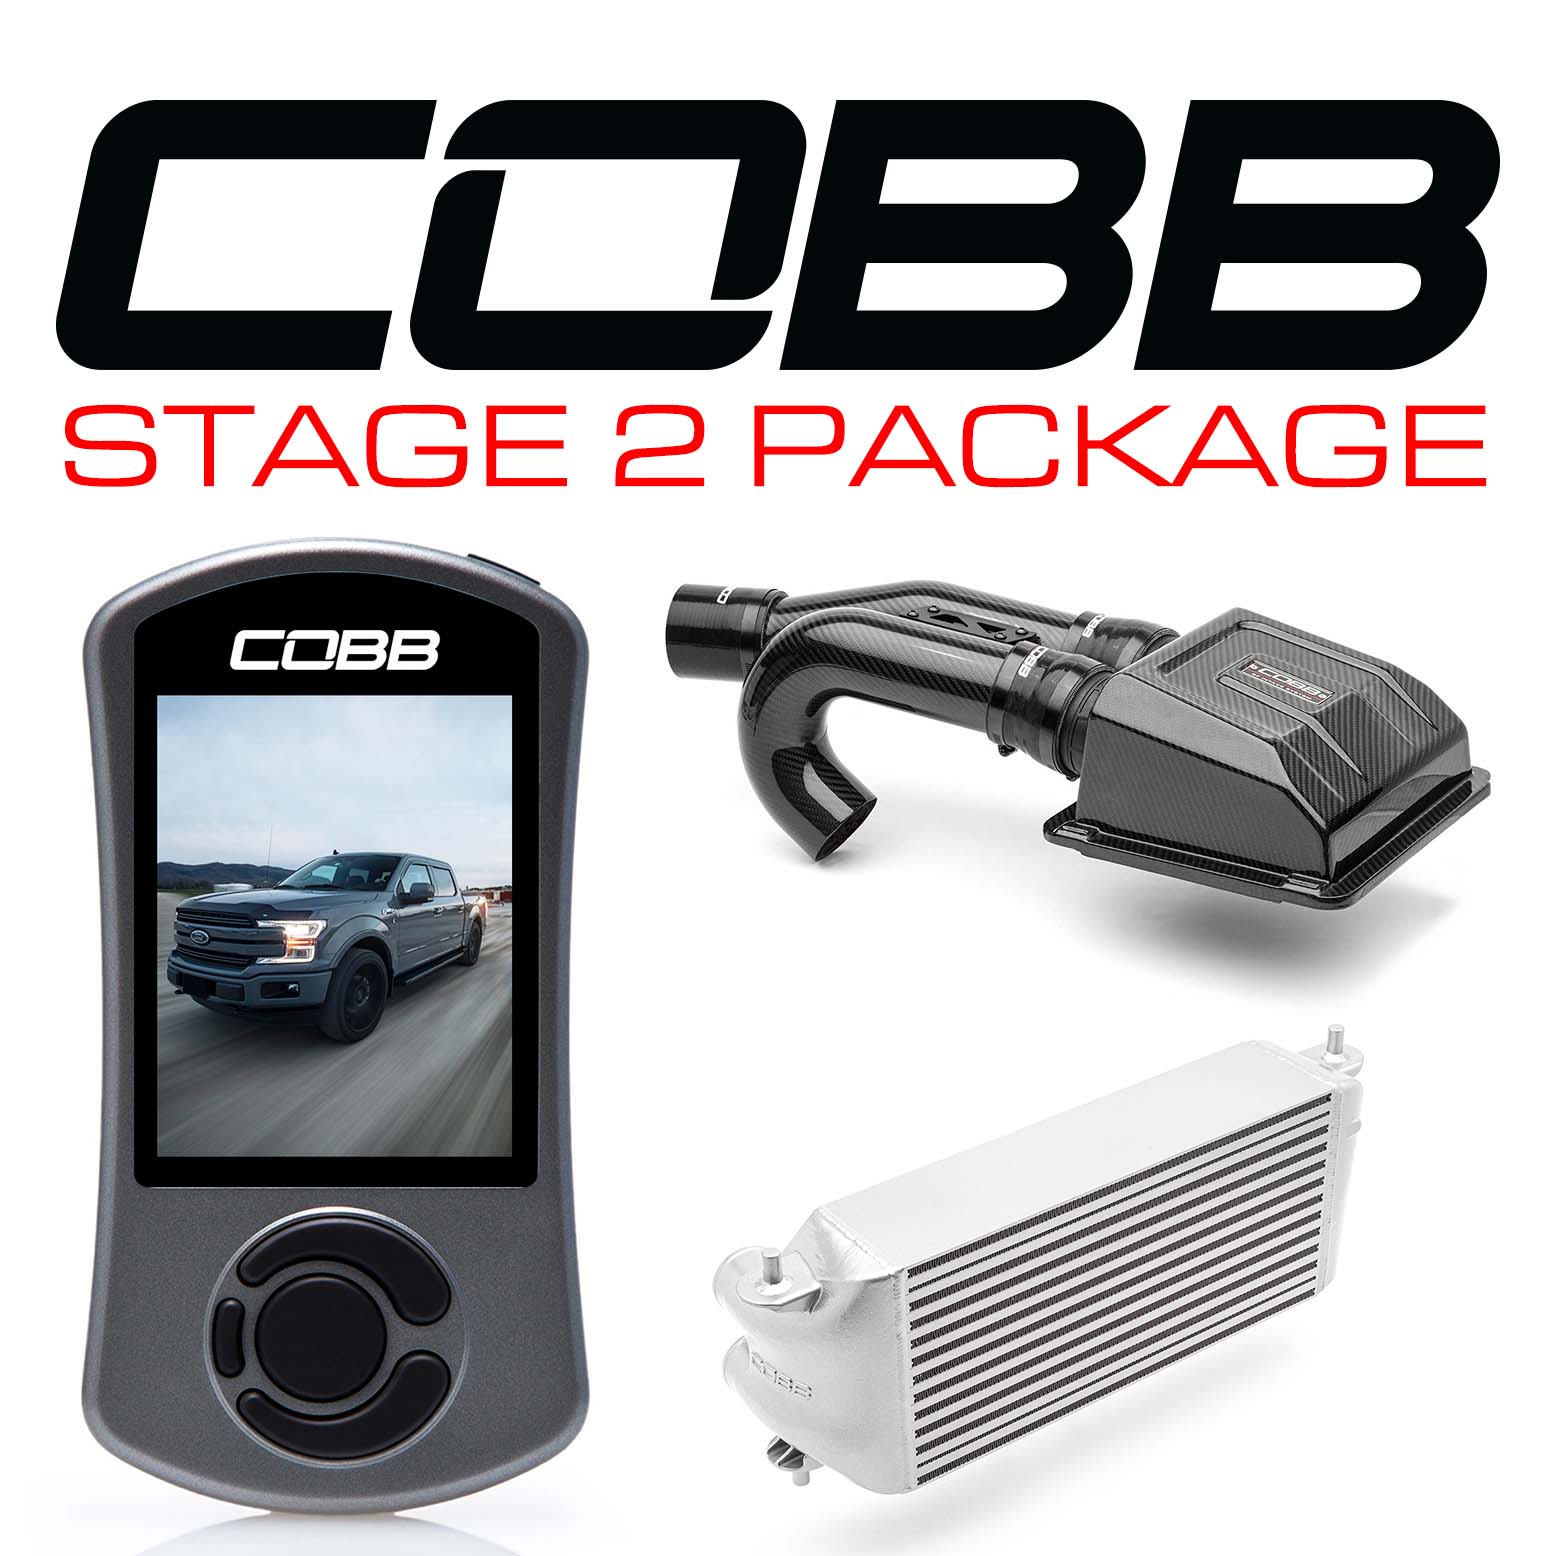 COBB Tuning - COBB x Covercraft Sun Shade Ford Fiesta ST 2014-2019